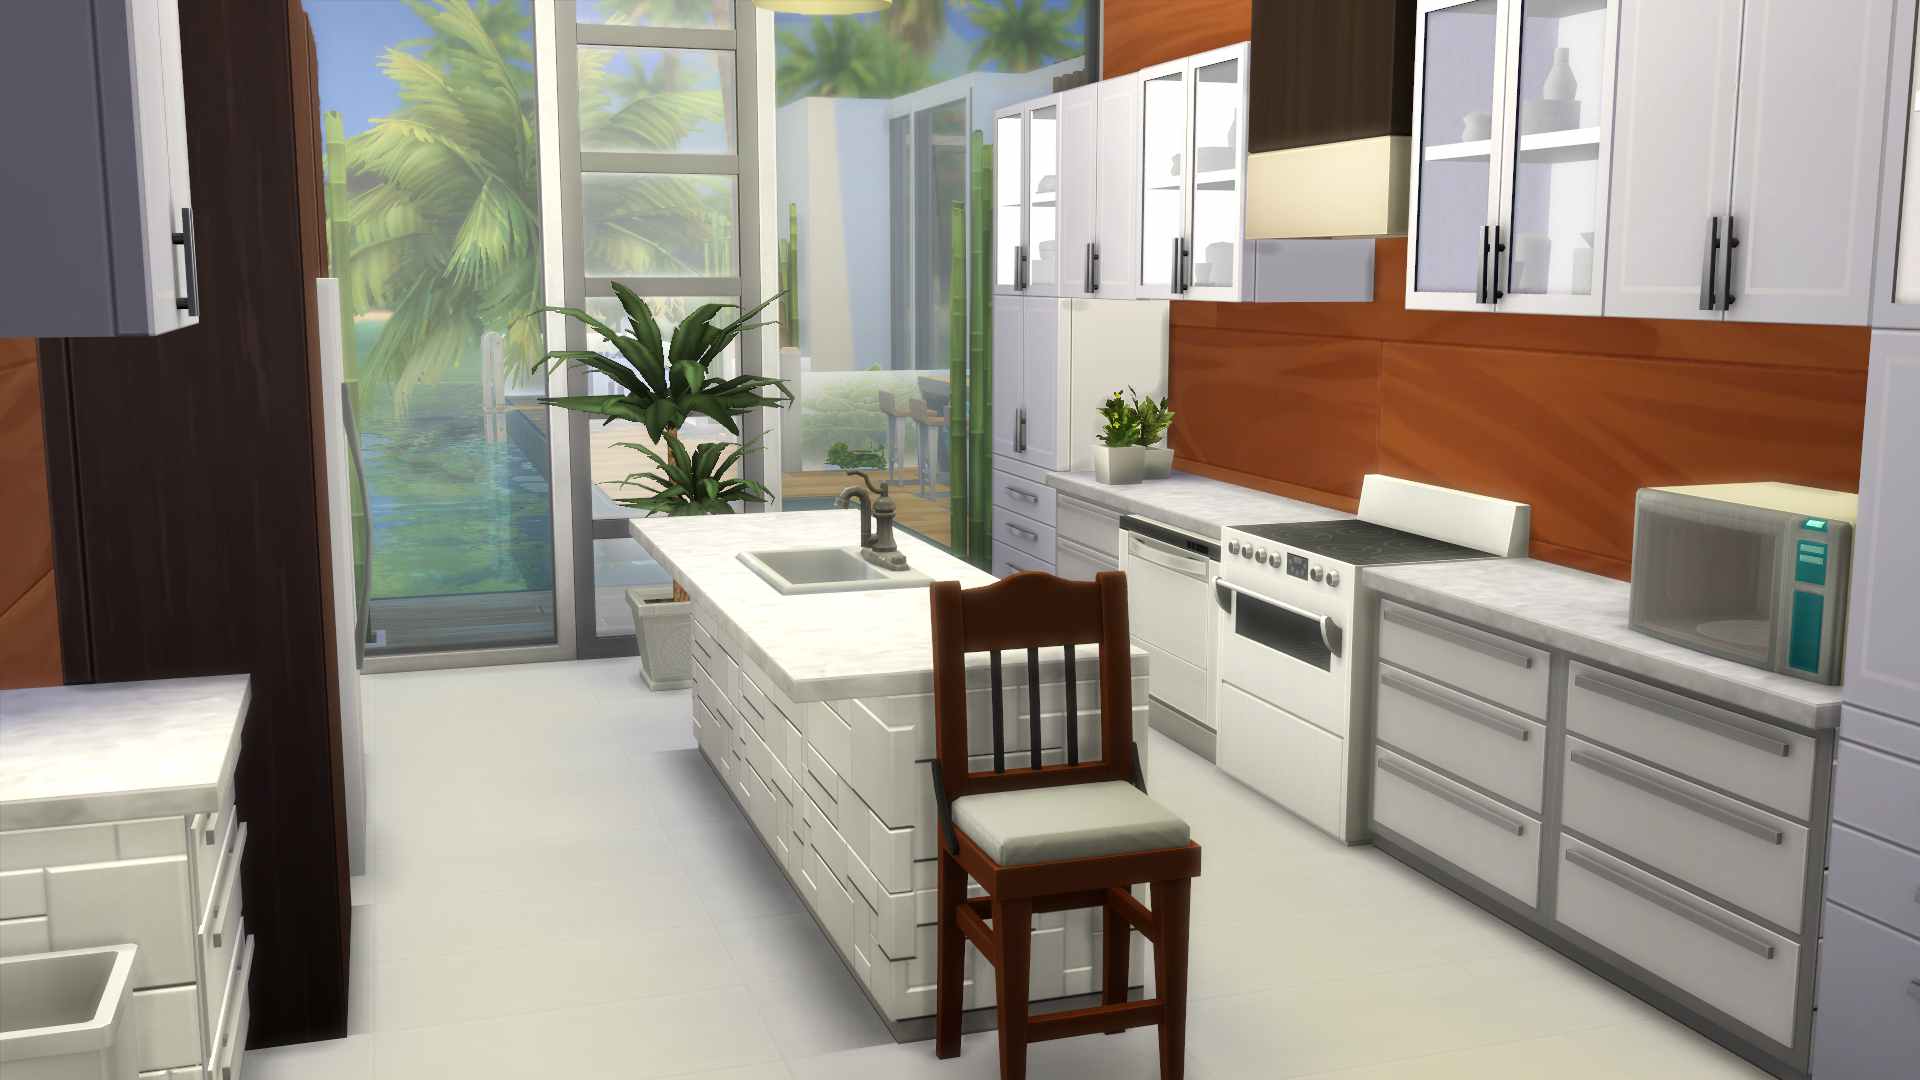 Sims 4 6 Casas Incríveis para Baixar